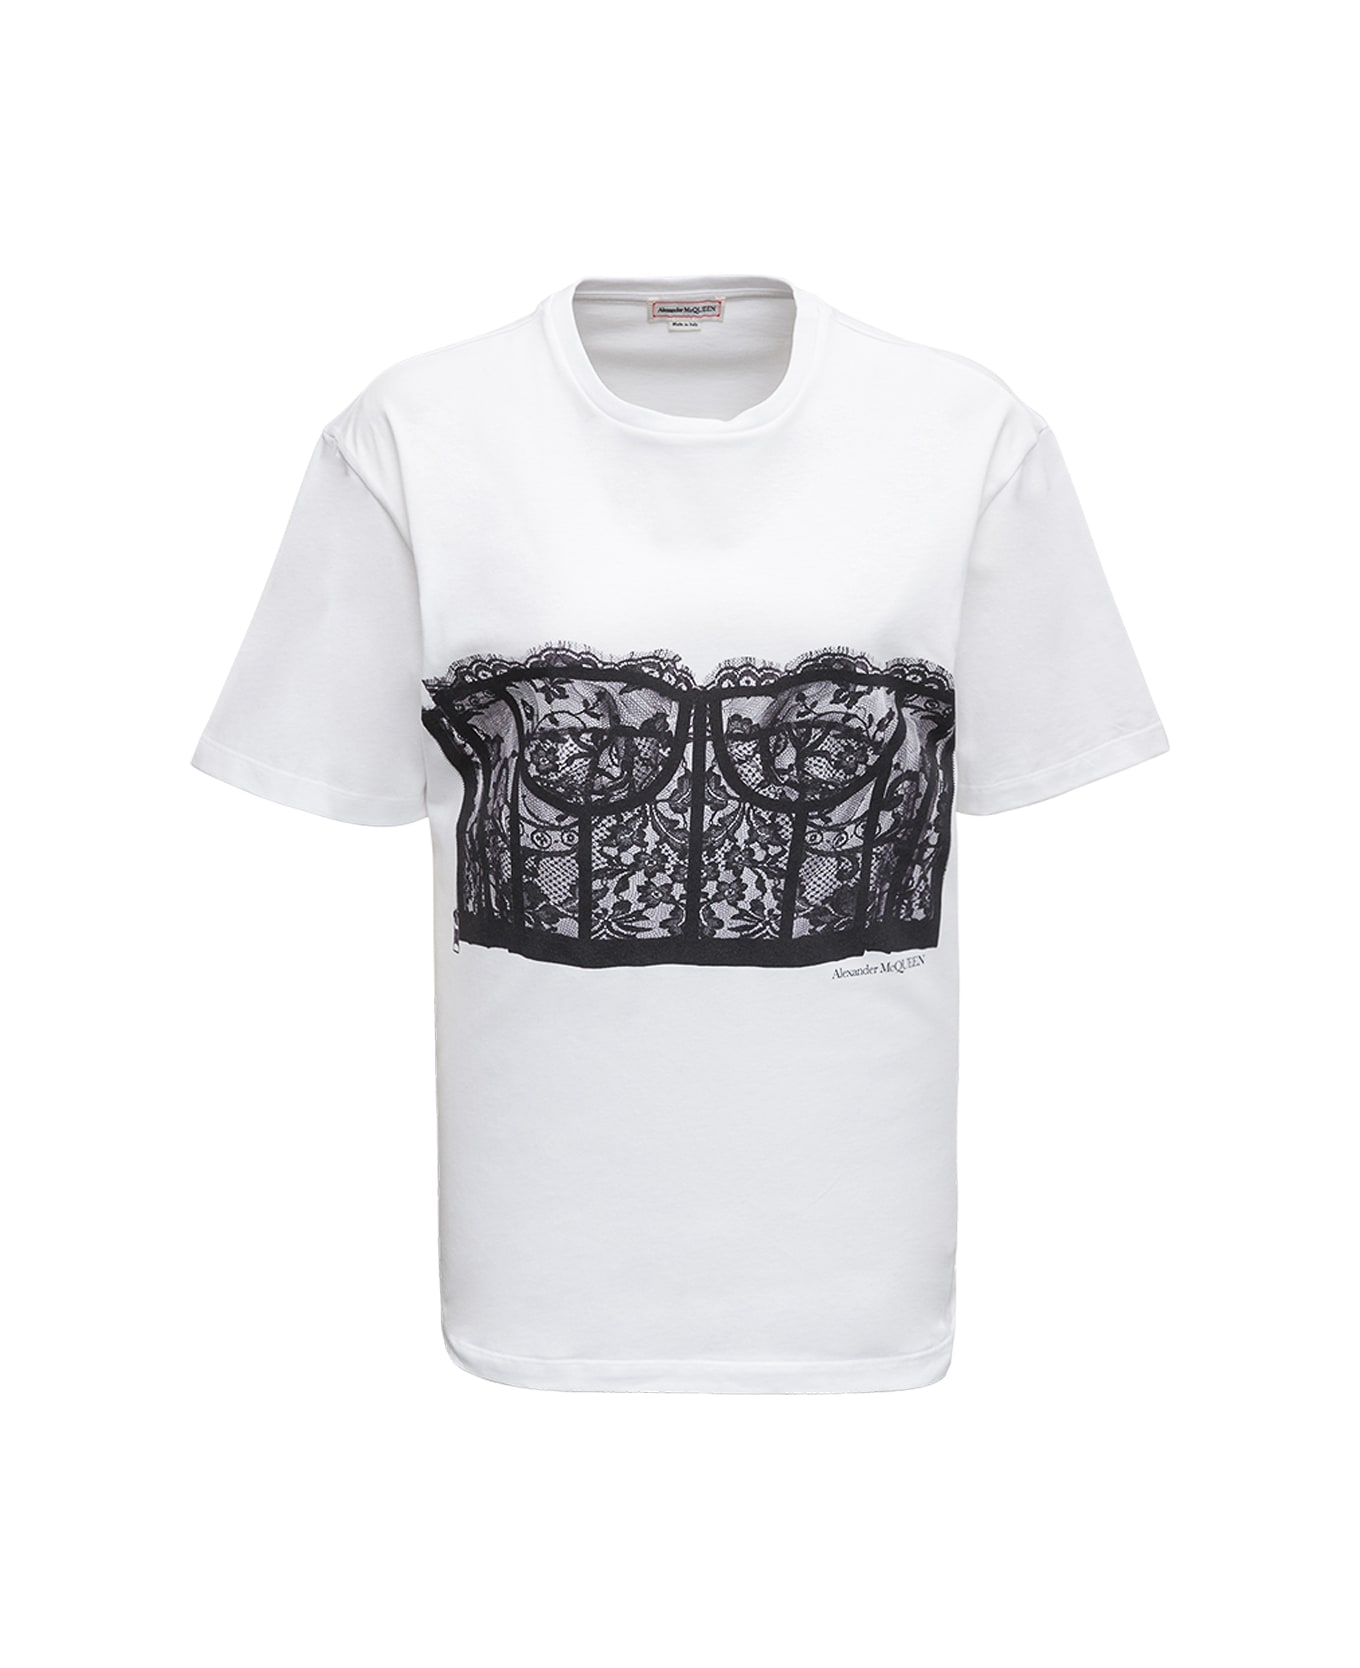 Alexander McQueen Woman's Cotton T-shirt With Corset Print - White